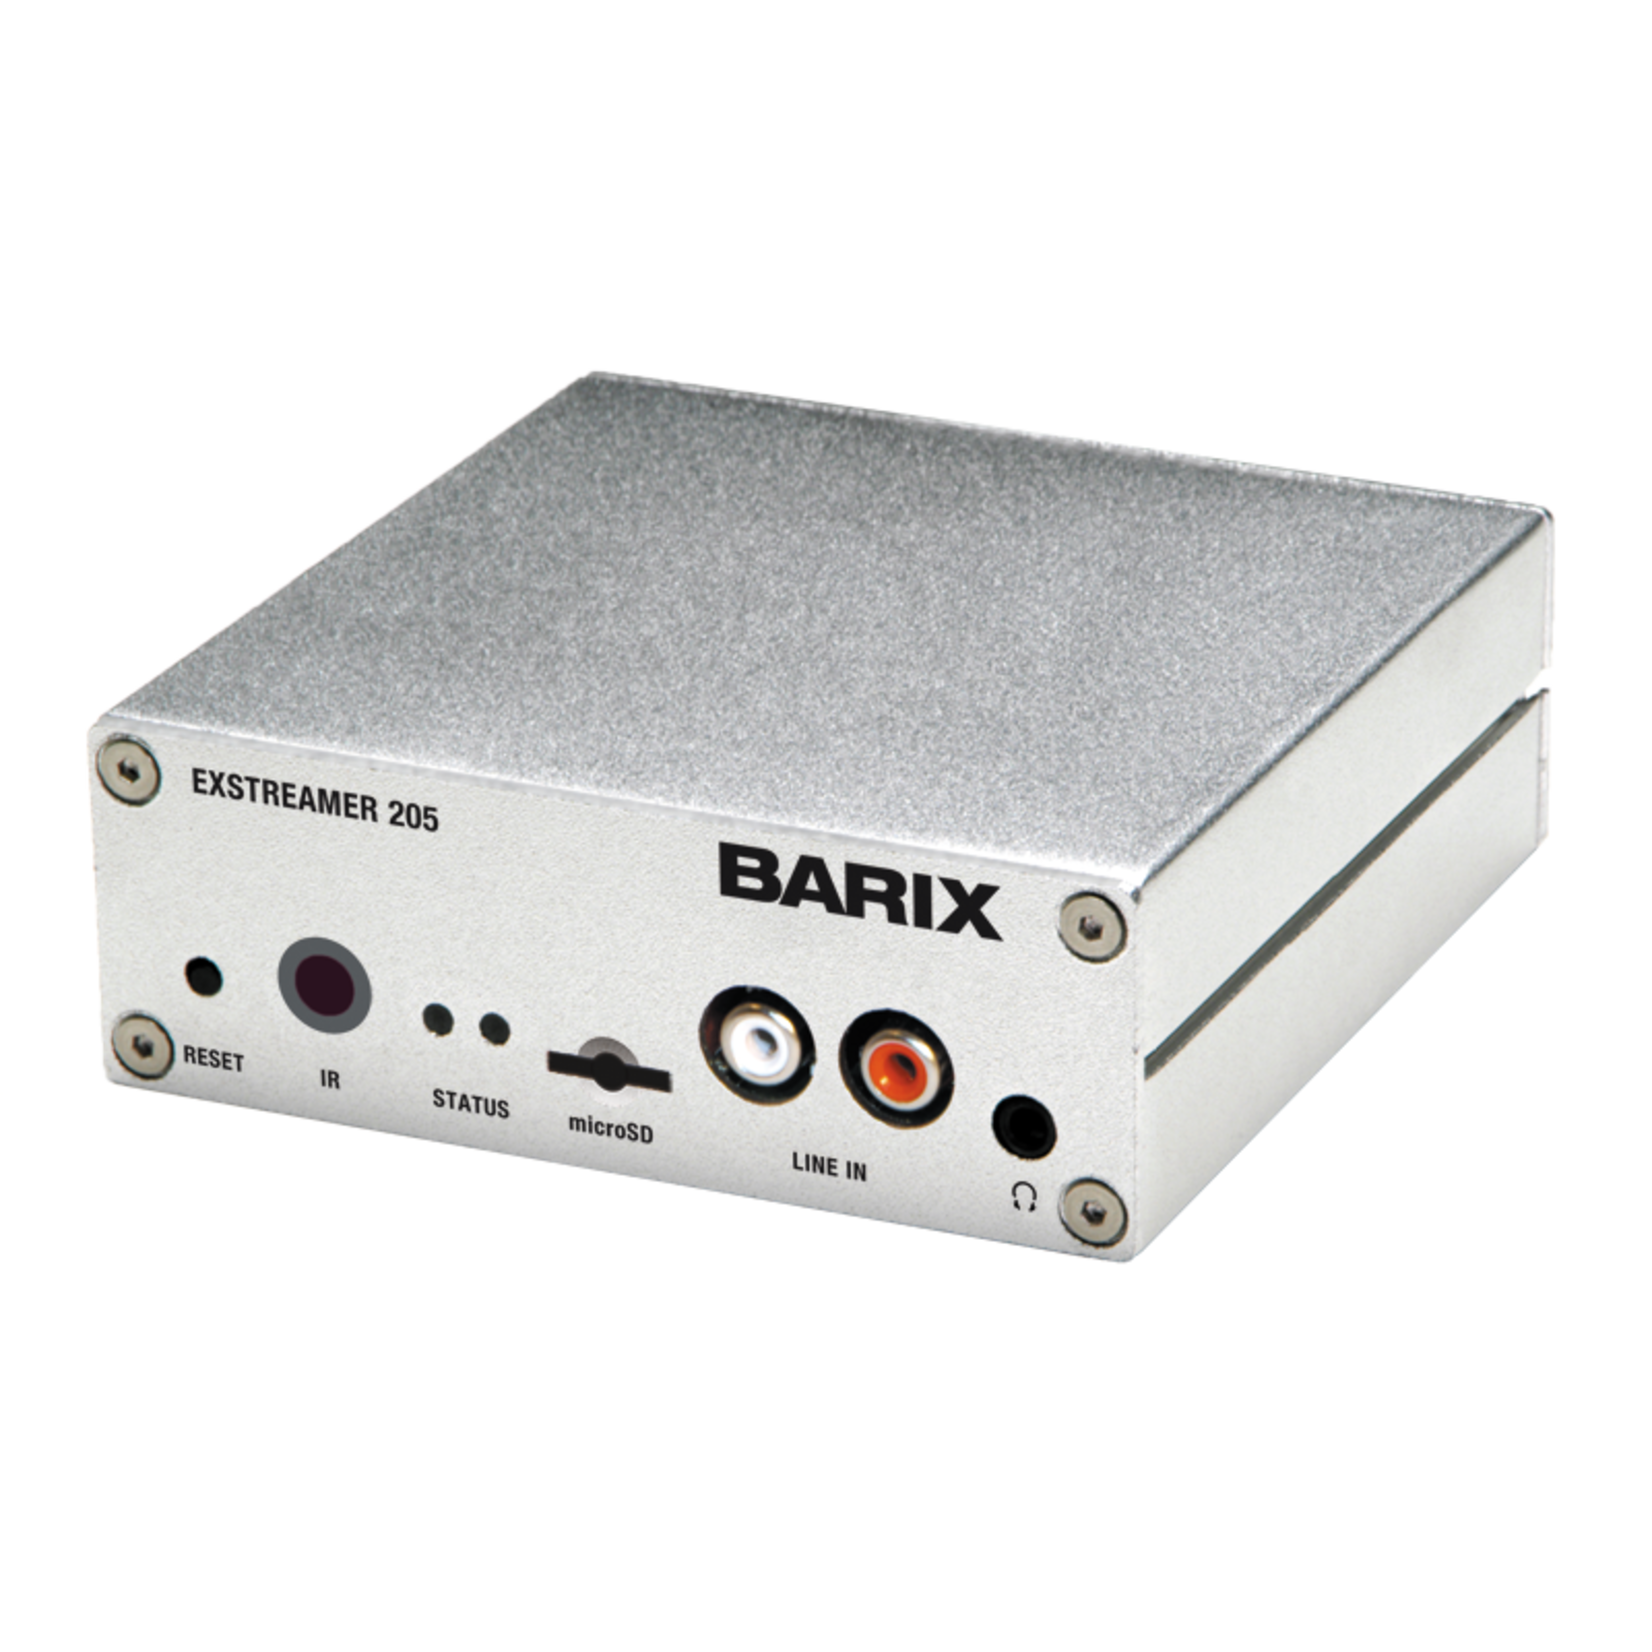 BARIX Exstreamer 205 EU/US package (100-240V)